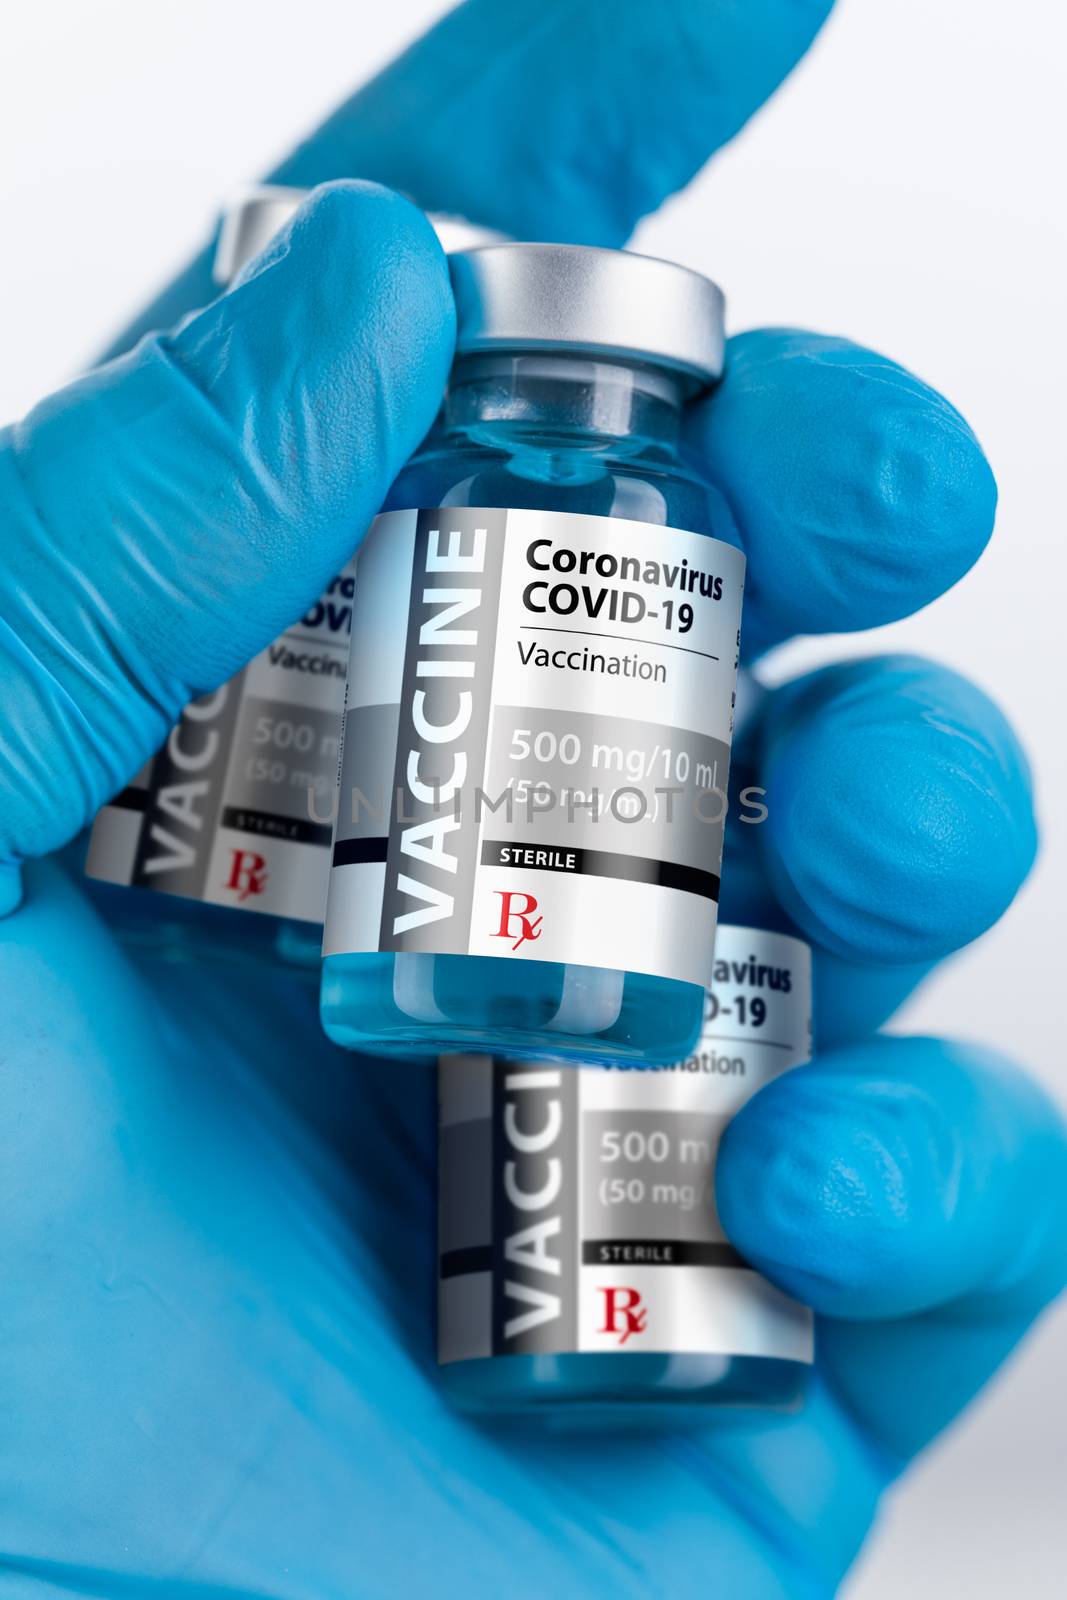 Doctor or Nurse Wearing Surgical Glove Holding Coronavirus COVID-19 Vaccine Vials.